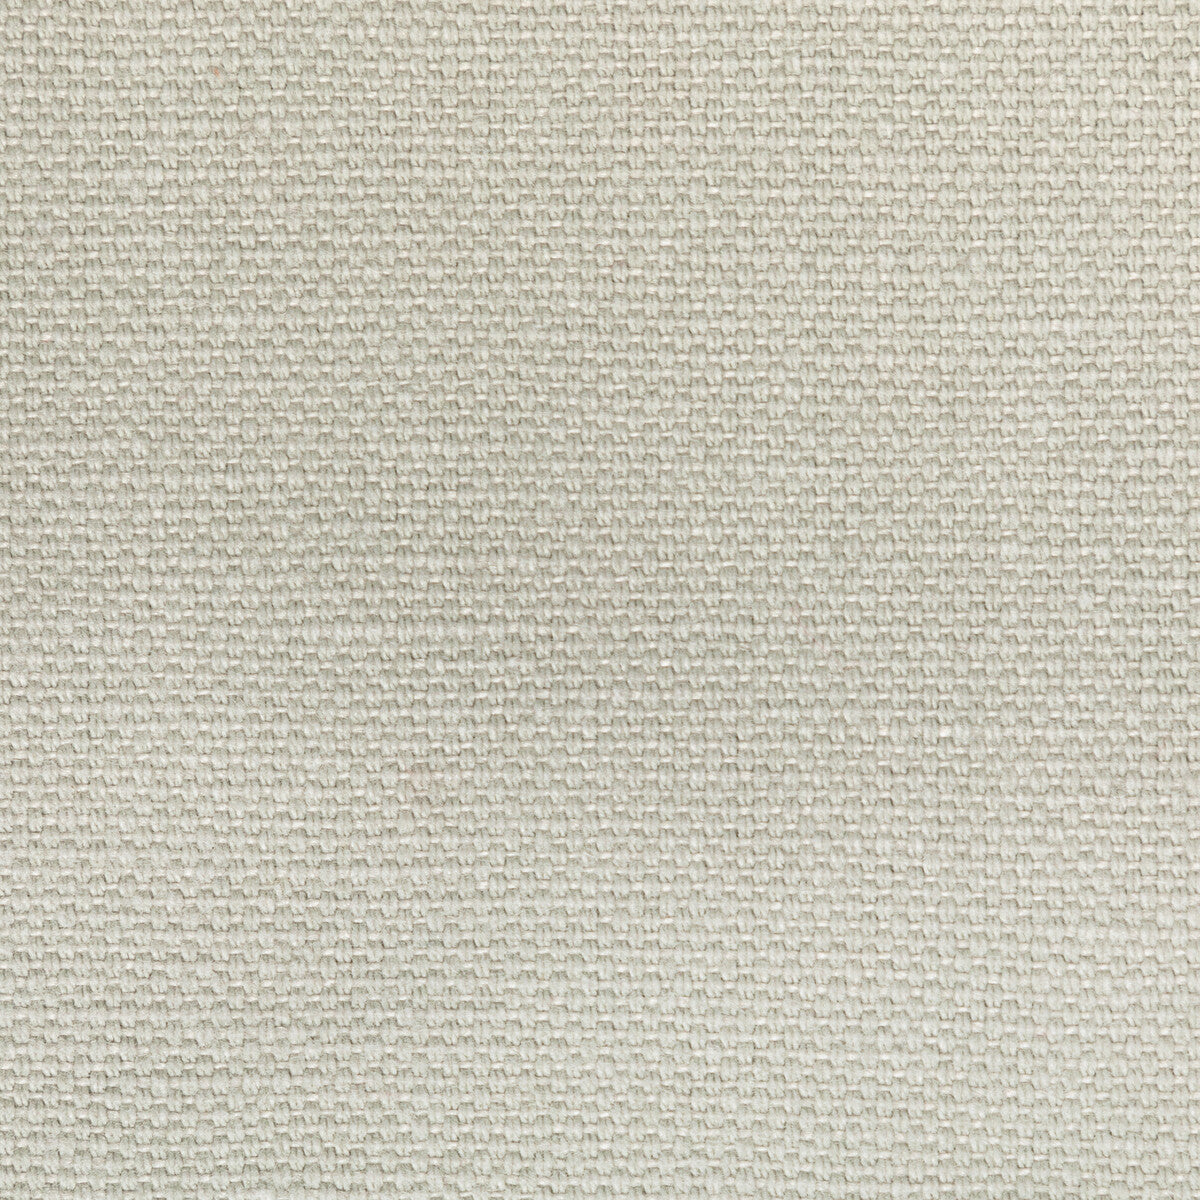 Carson fabric in fog color - pattern 36282.11.0 - by Kravet Basics